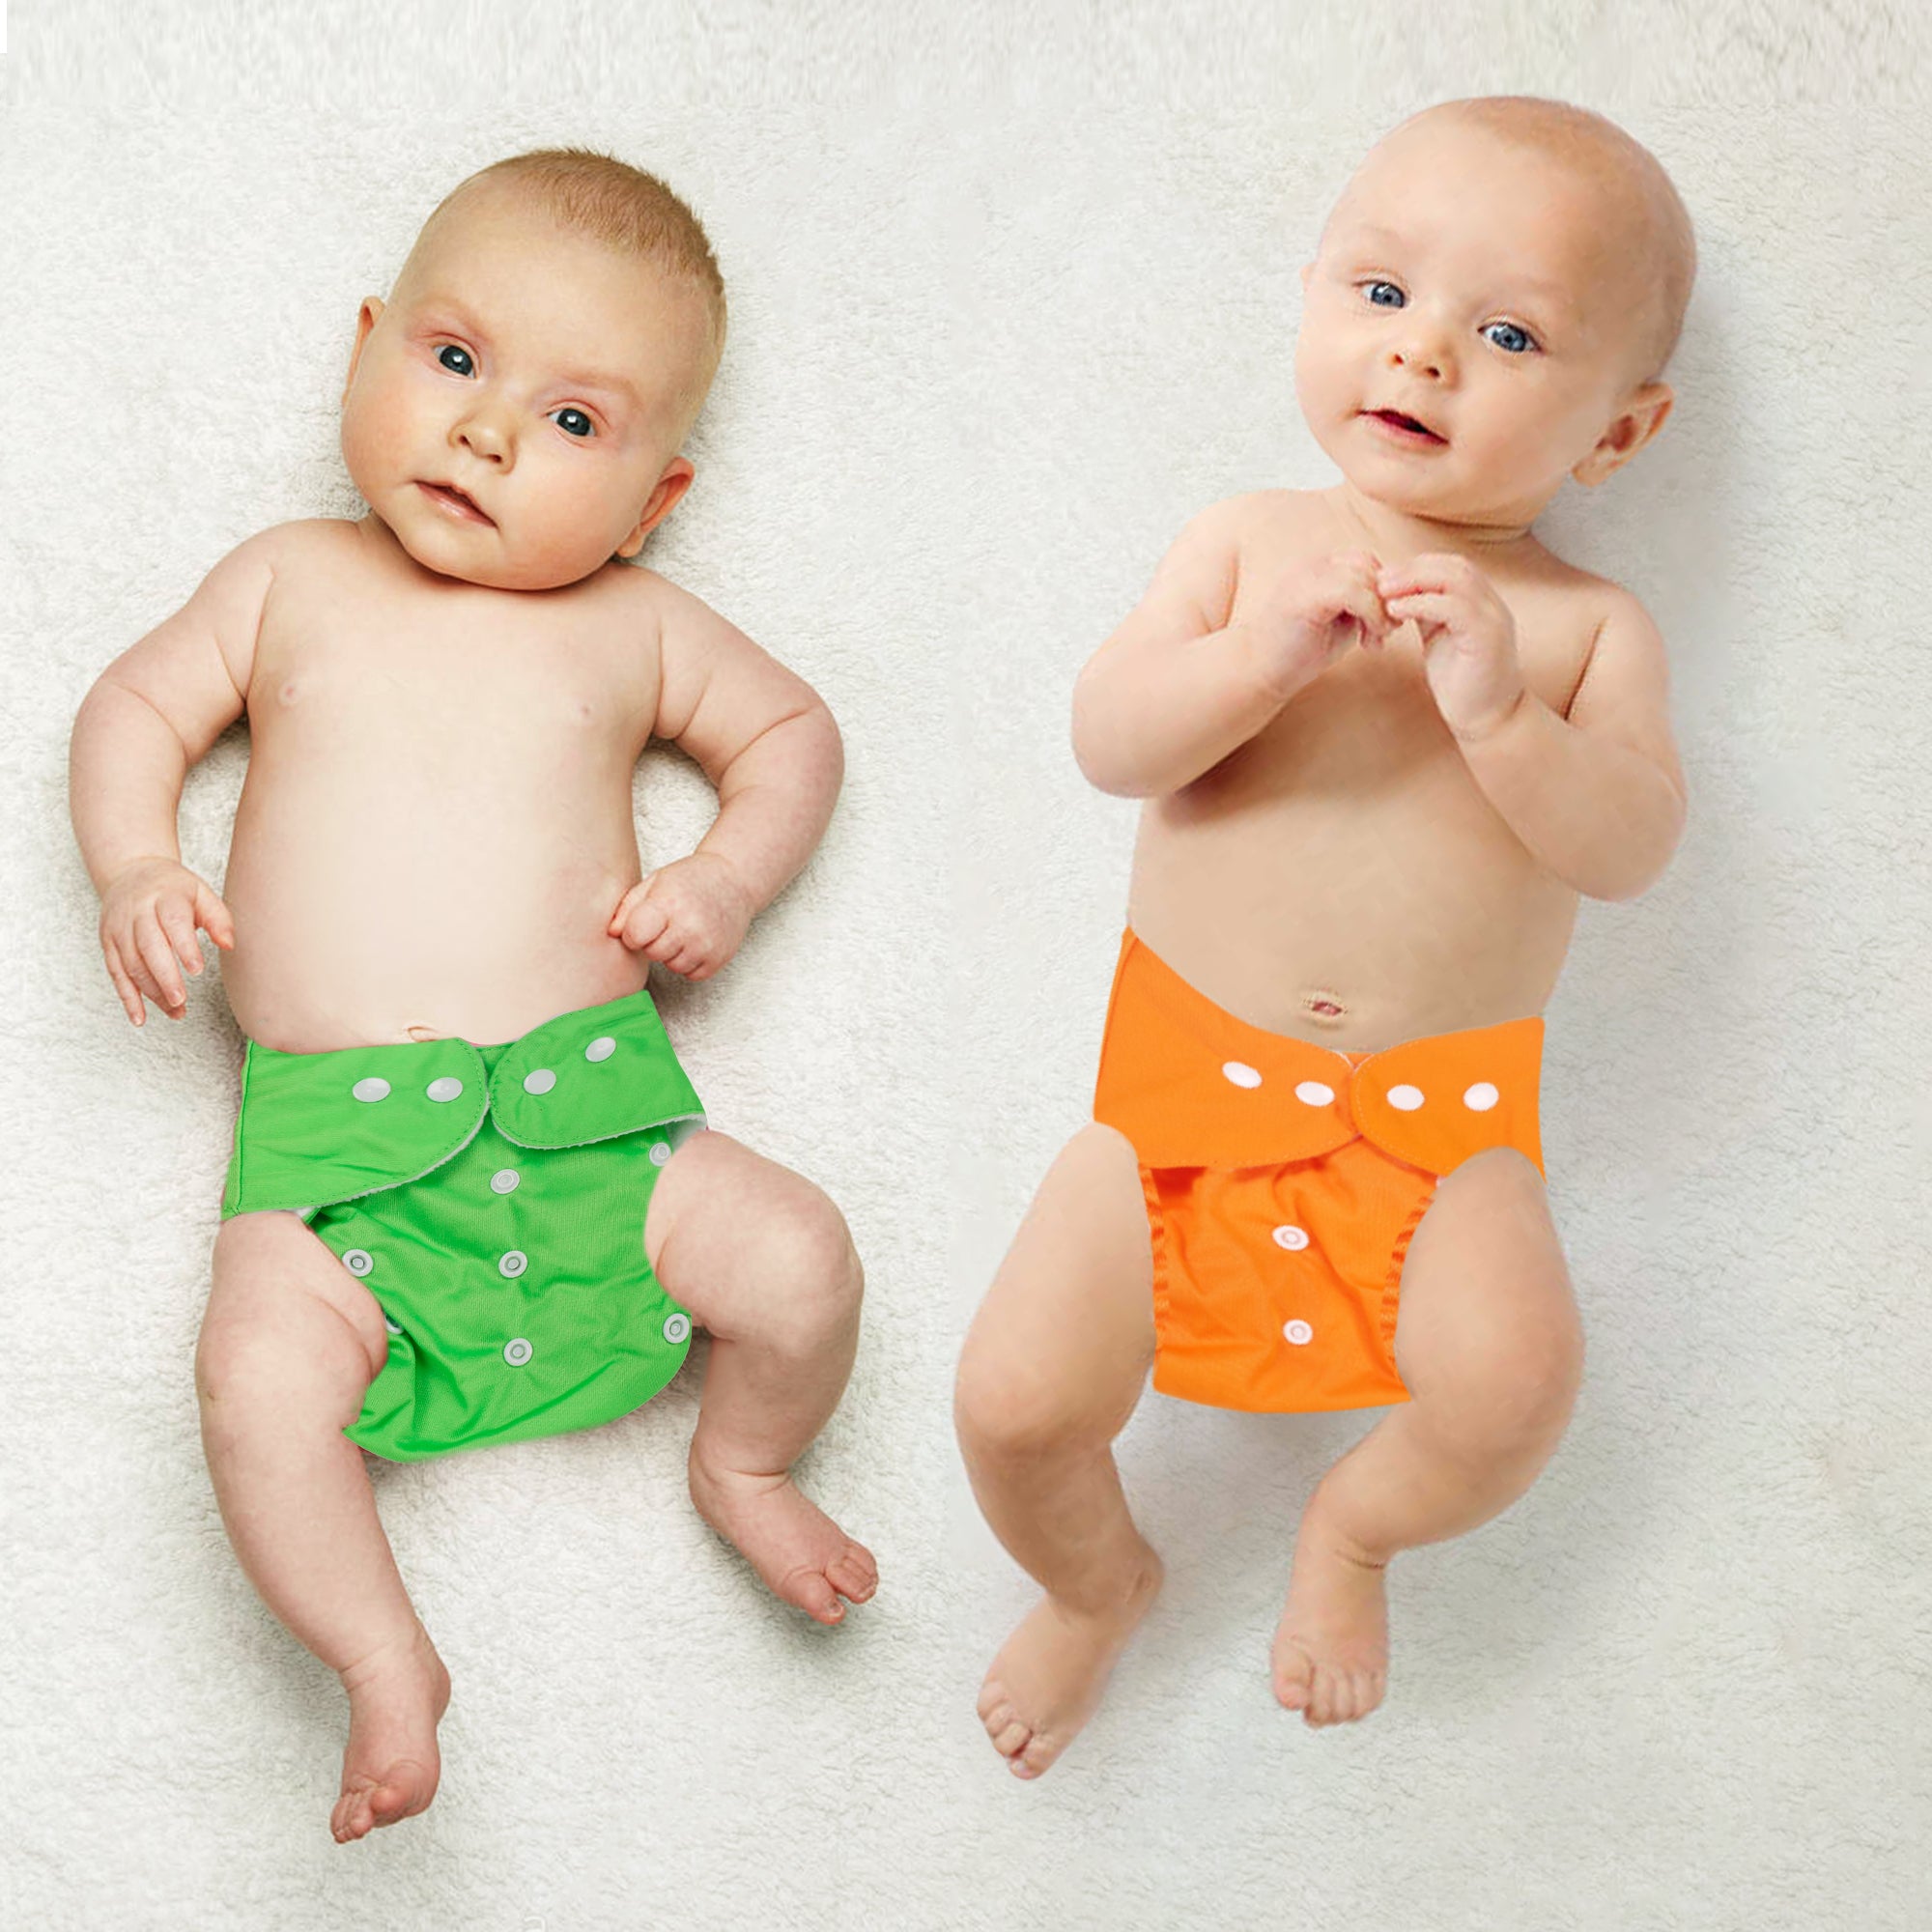 Plain Orange And Green Reusable 2 Pk Diaper - Baby Moo